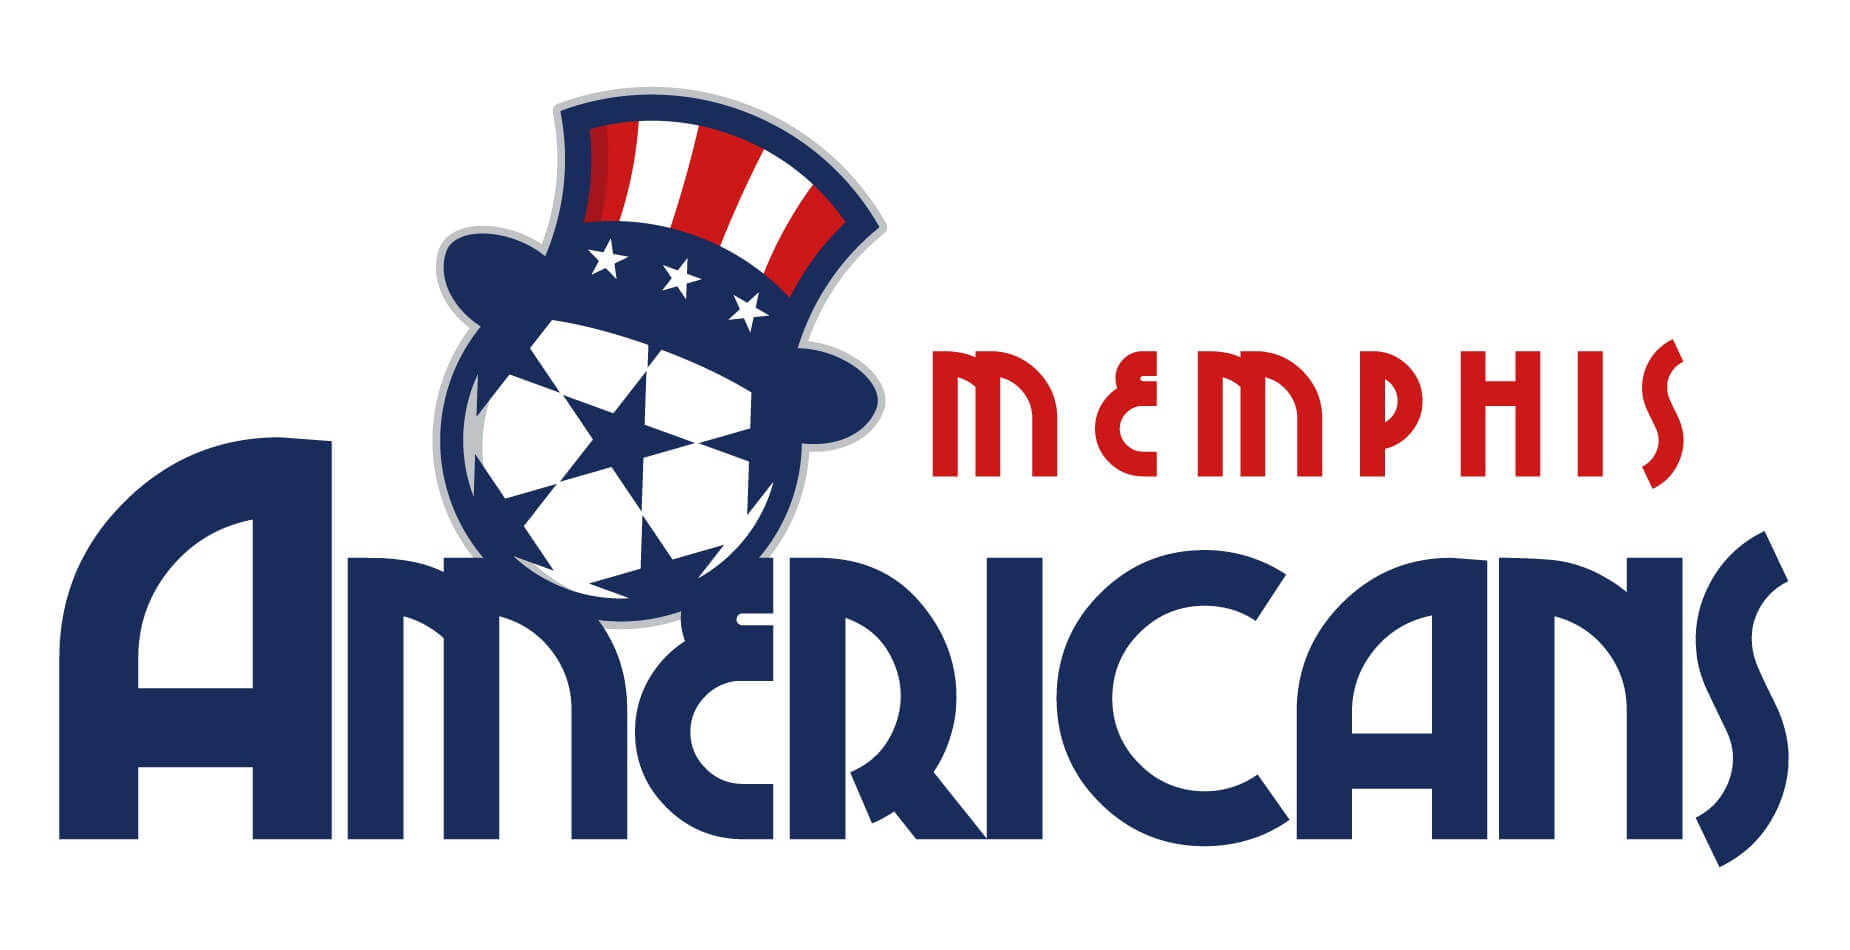 Memphis Americans logo